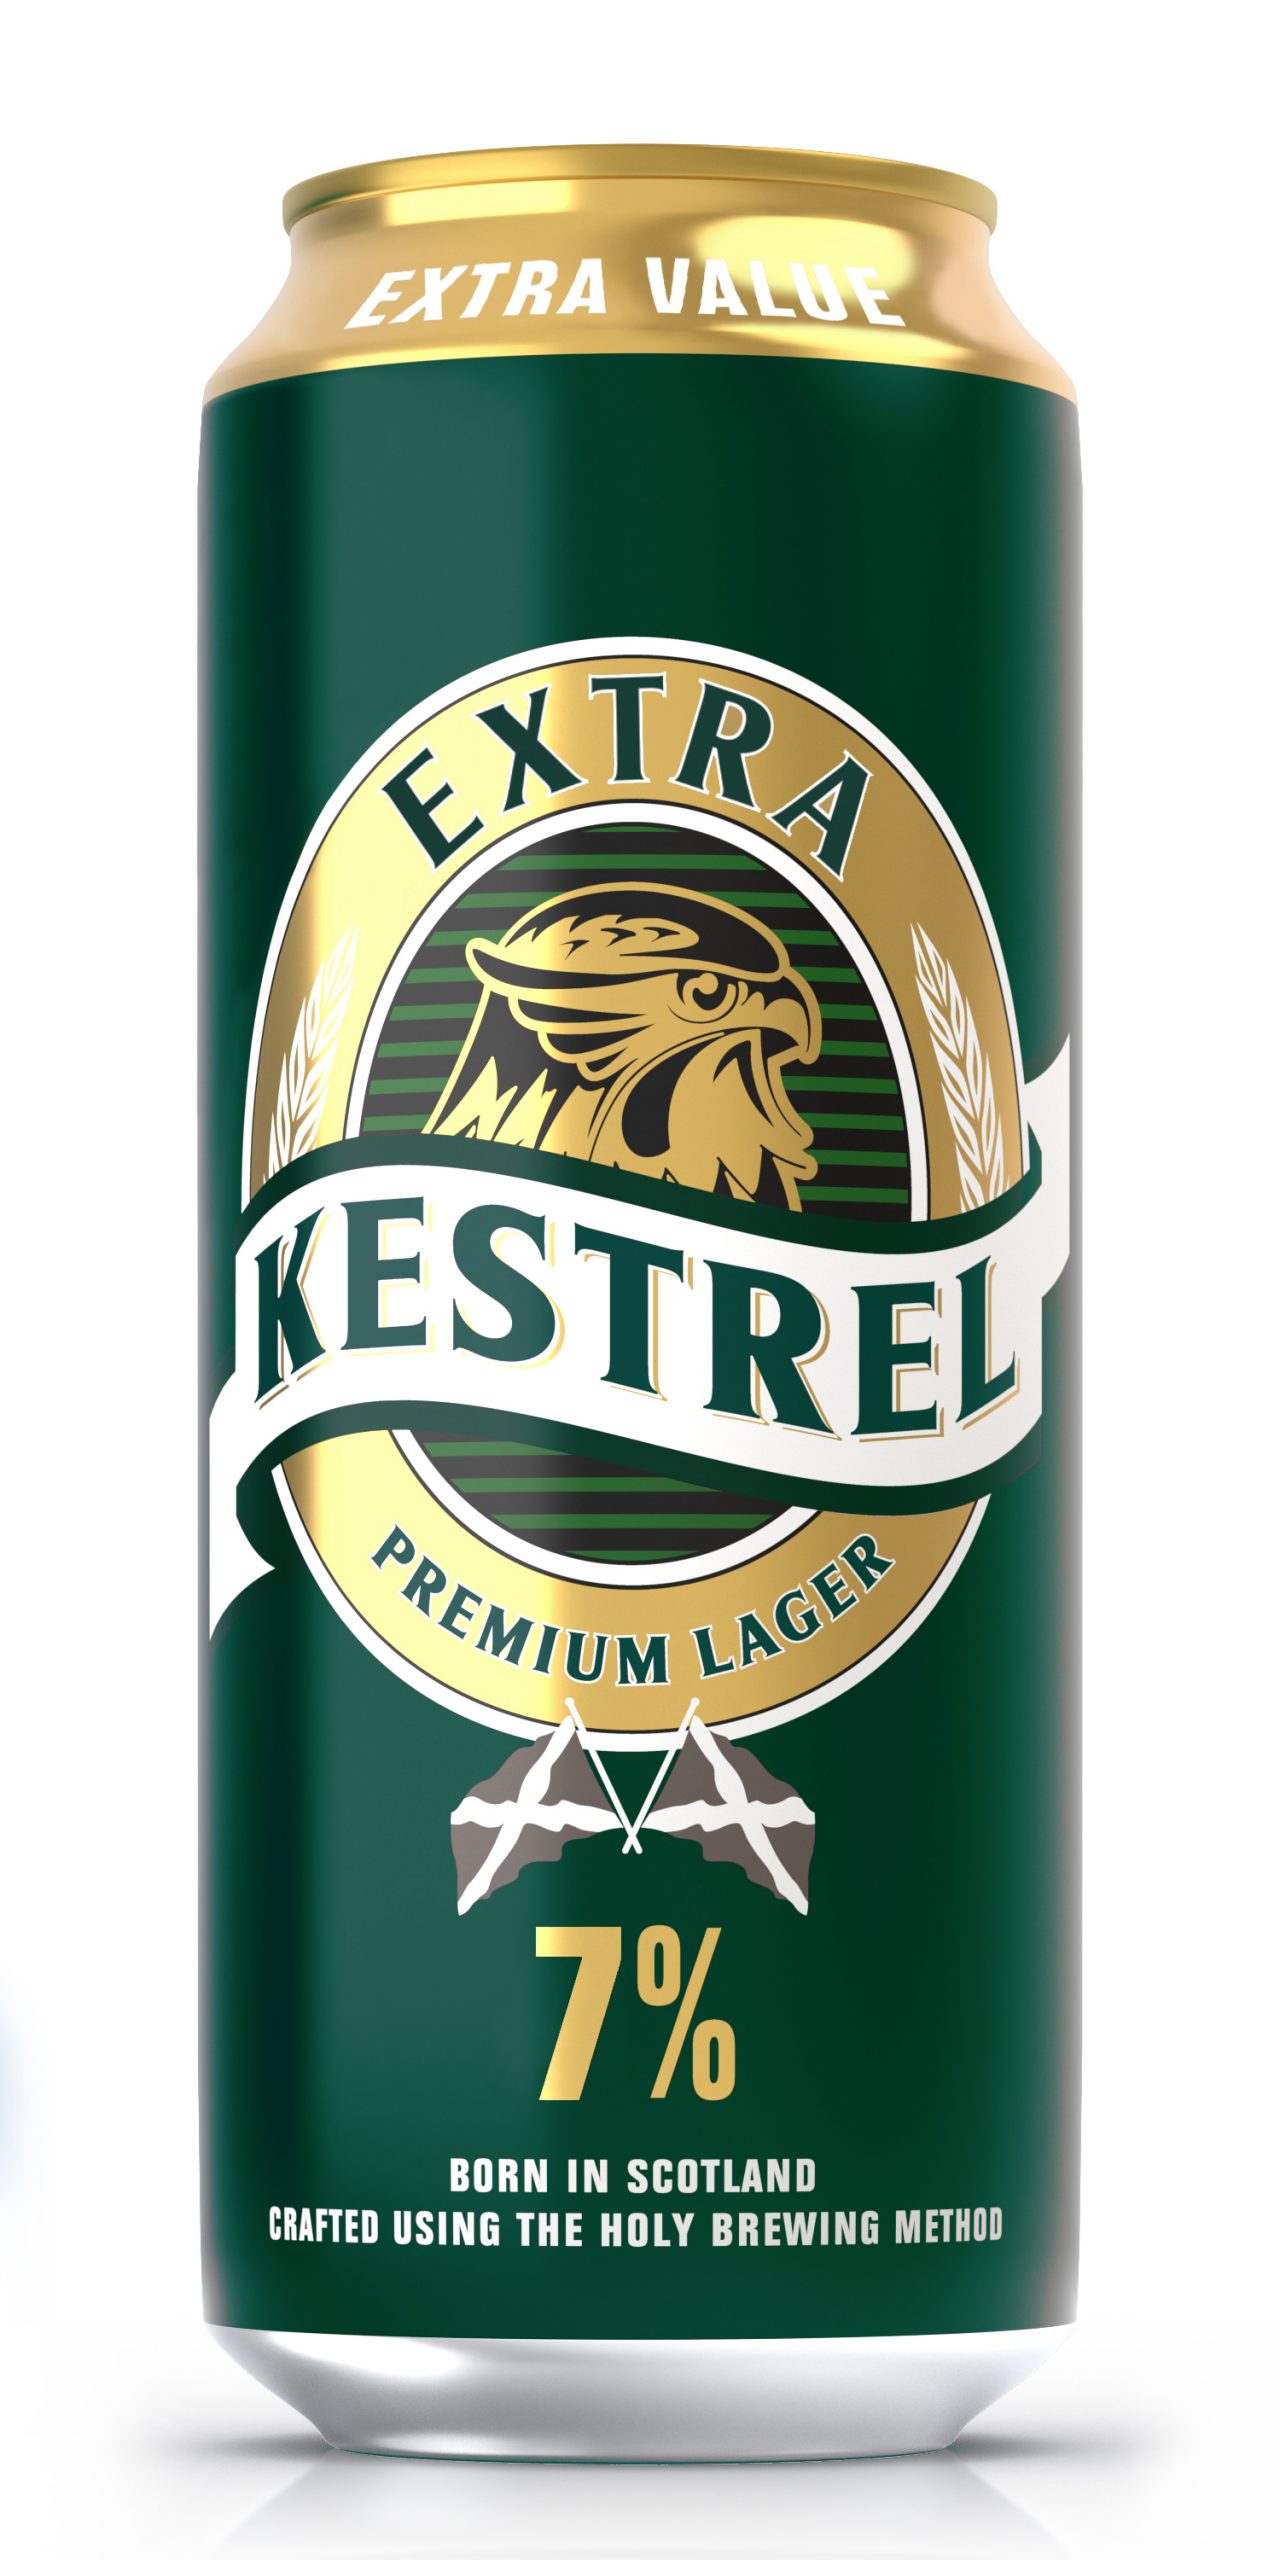 New Kestrel Extra Premium canned lager variant to hit shelves